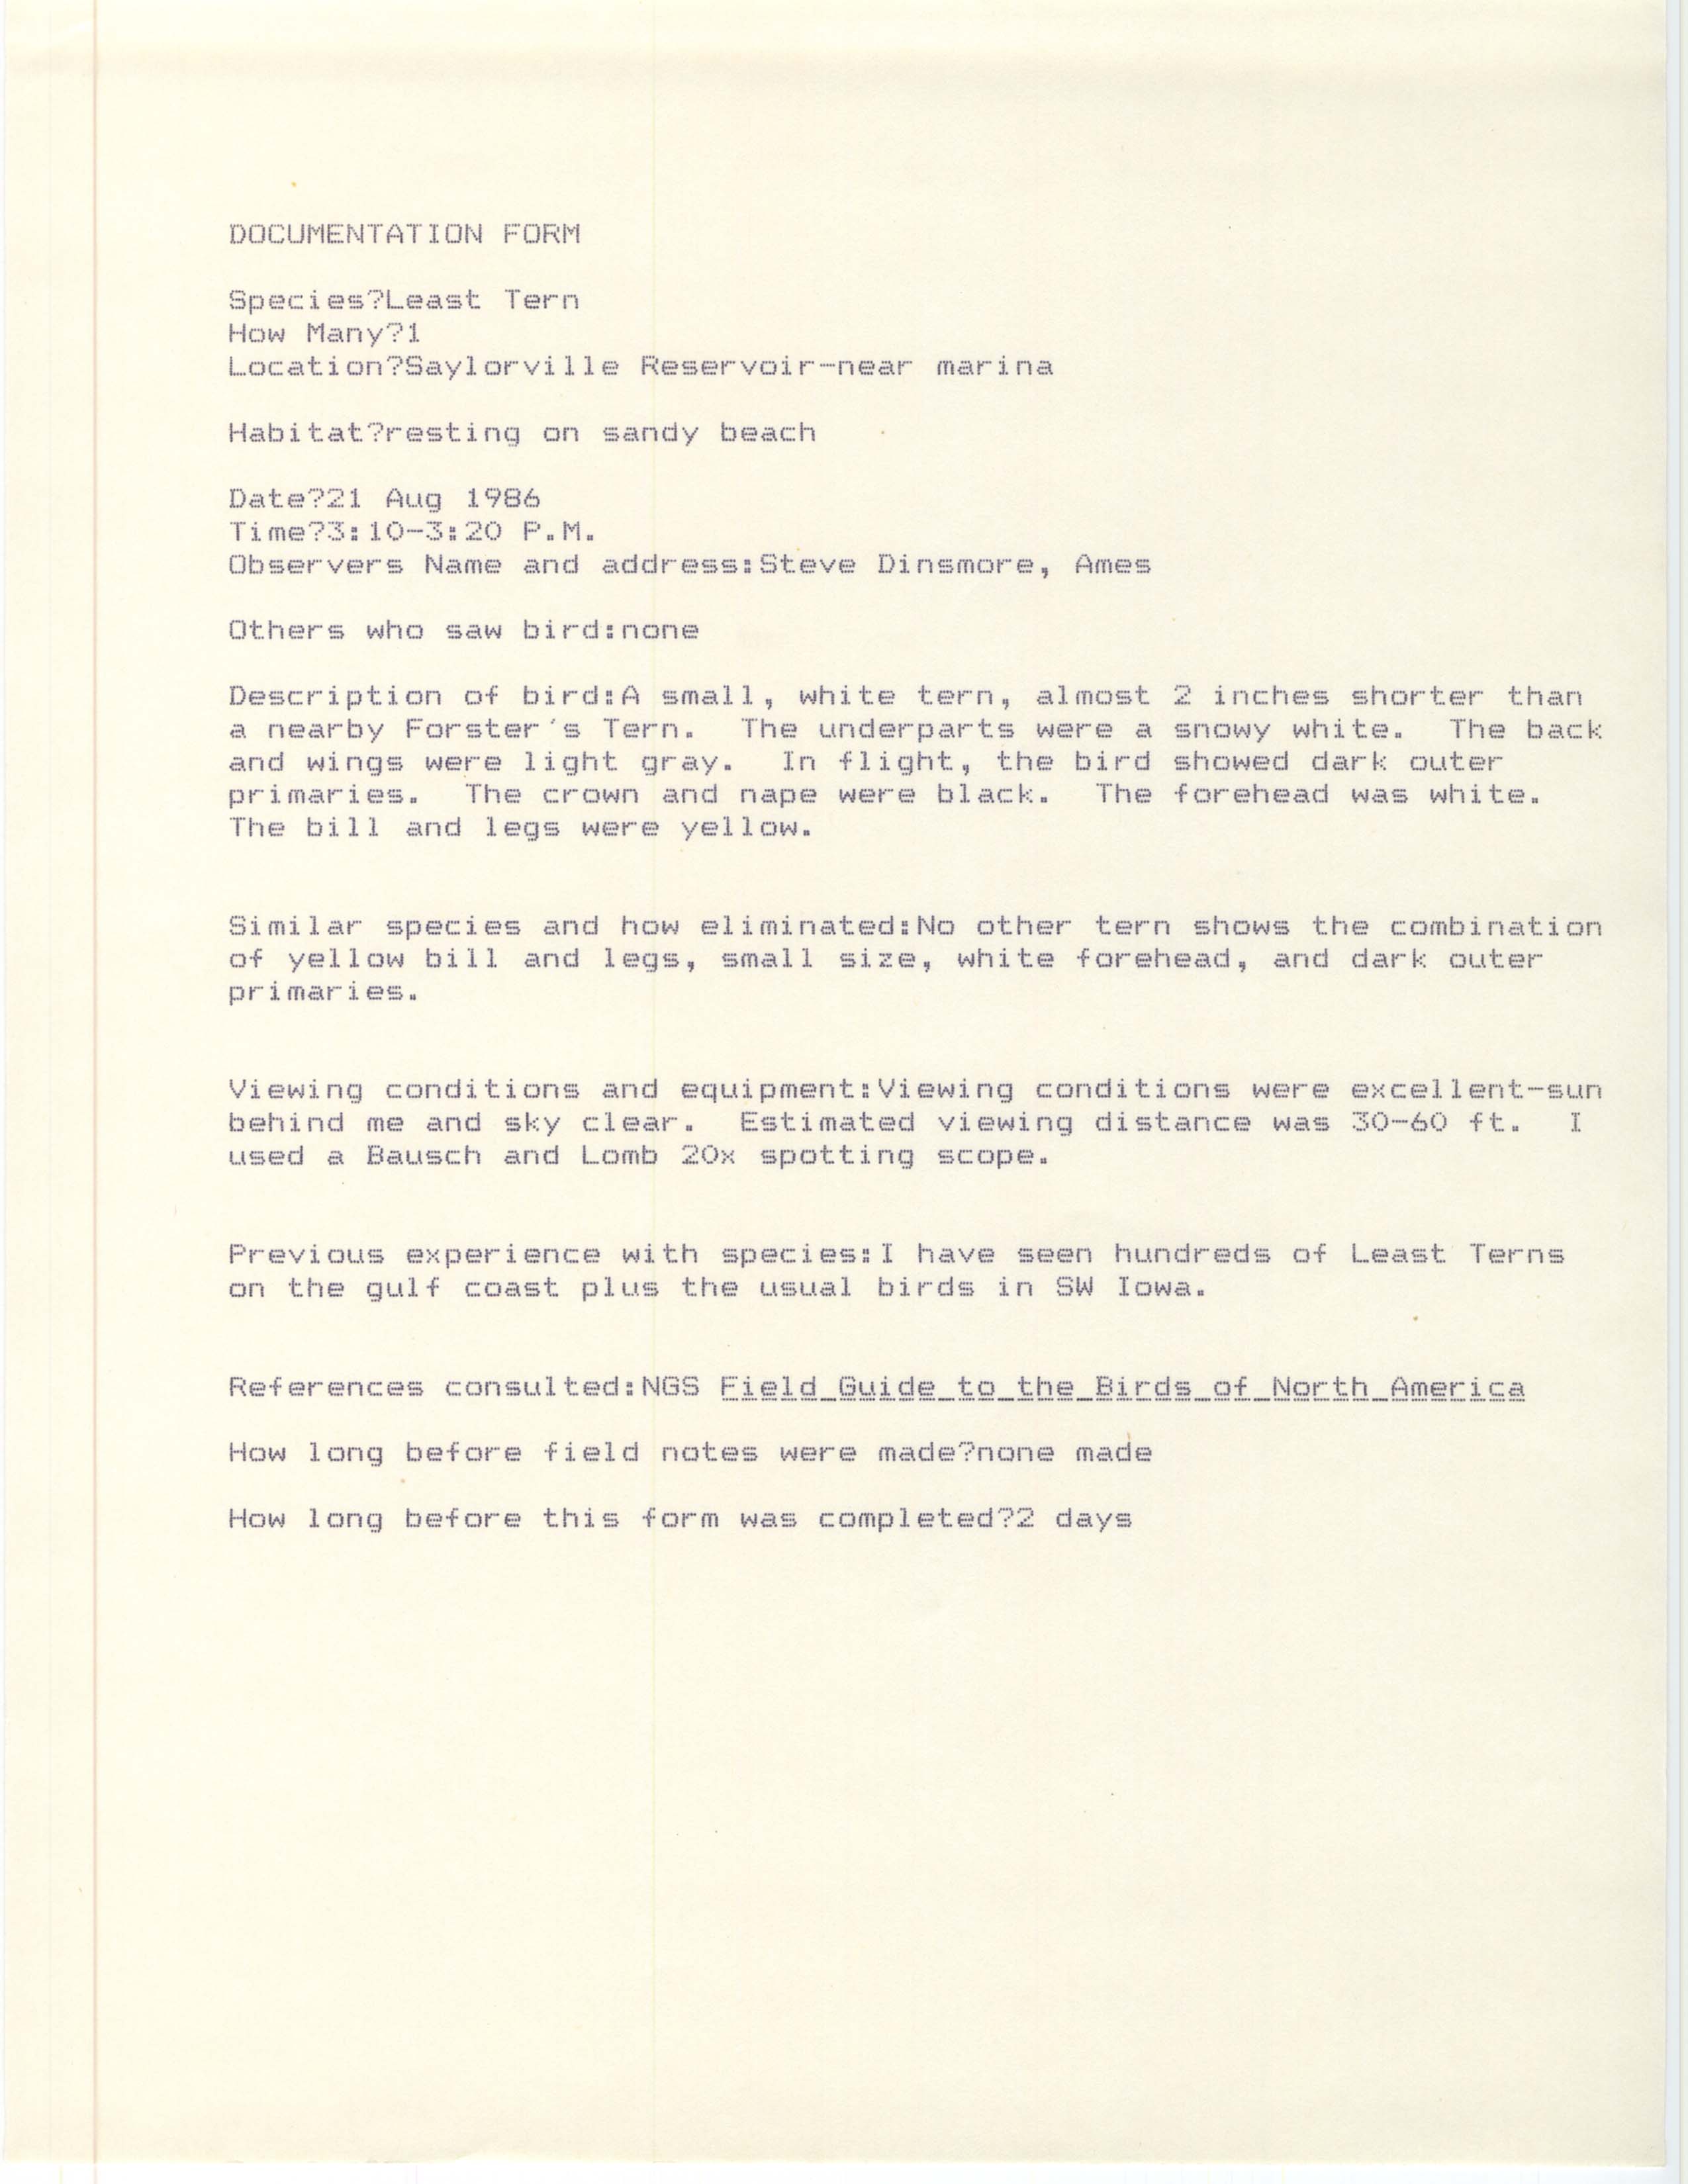 Rare bird documentation form for Least Tern at Saylorville Marina, 1986